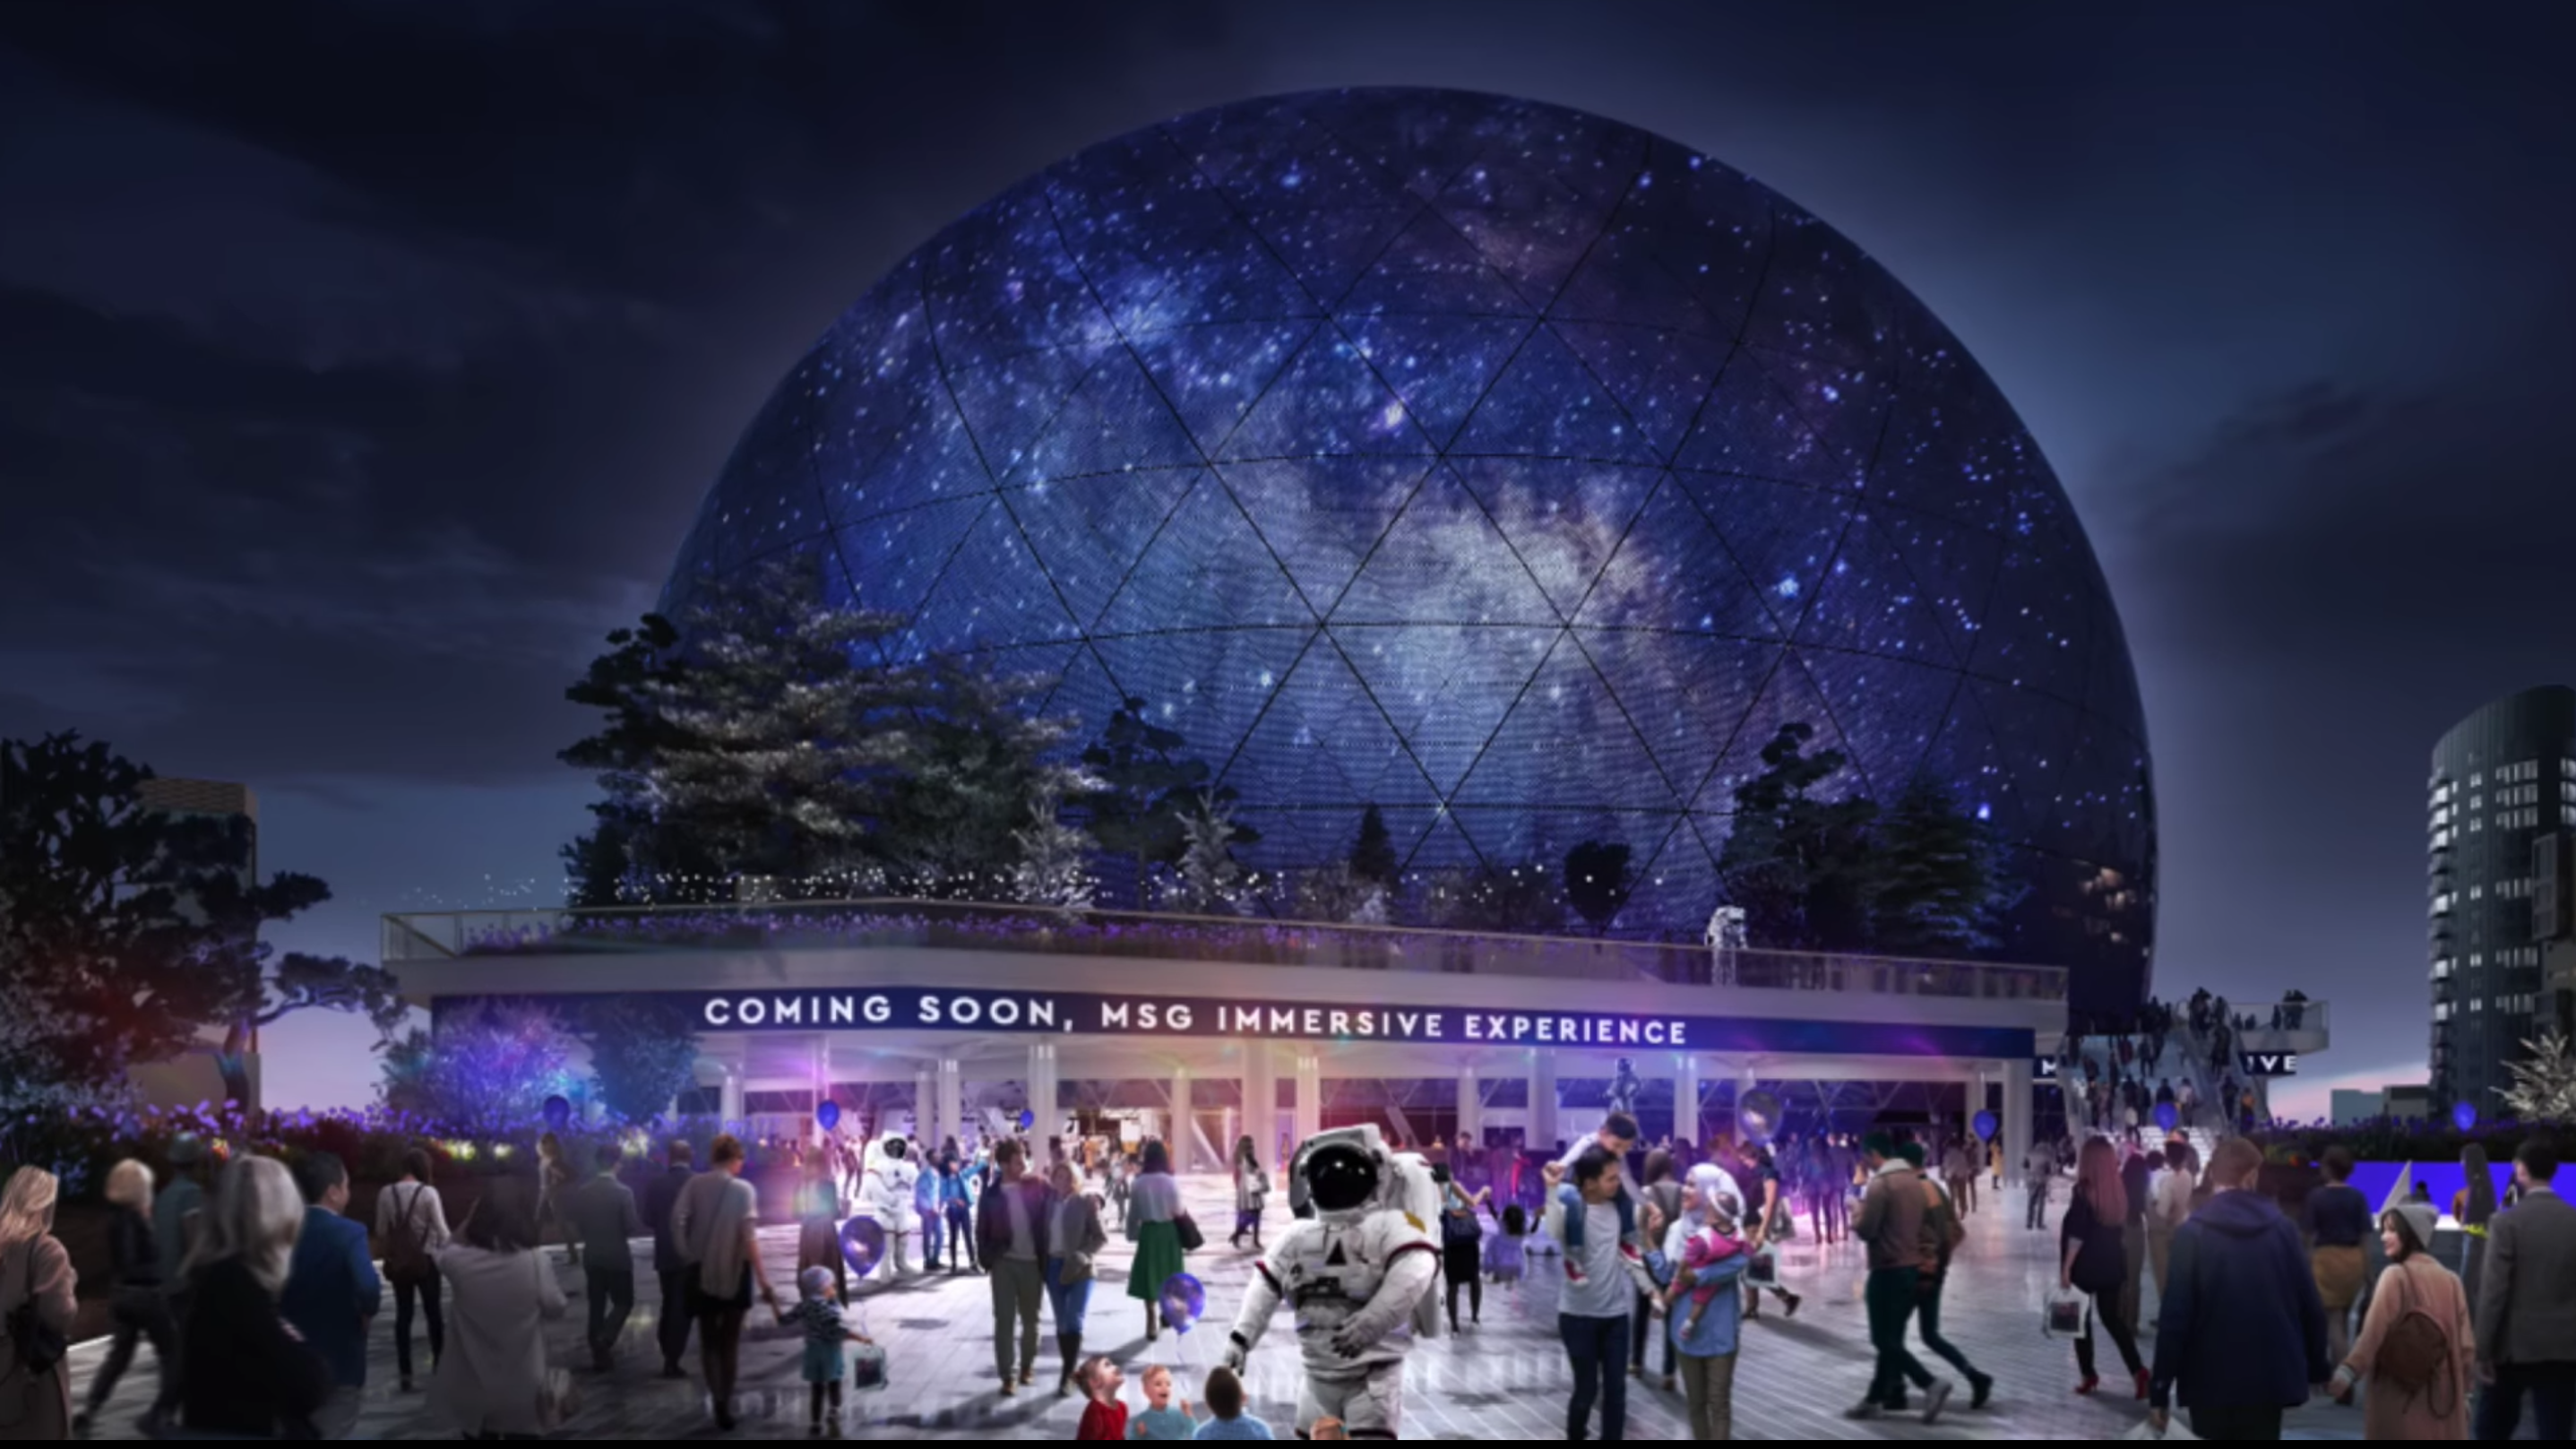 Gaze upon London’s gigantic, terrifying space orb stadium